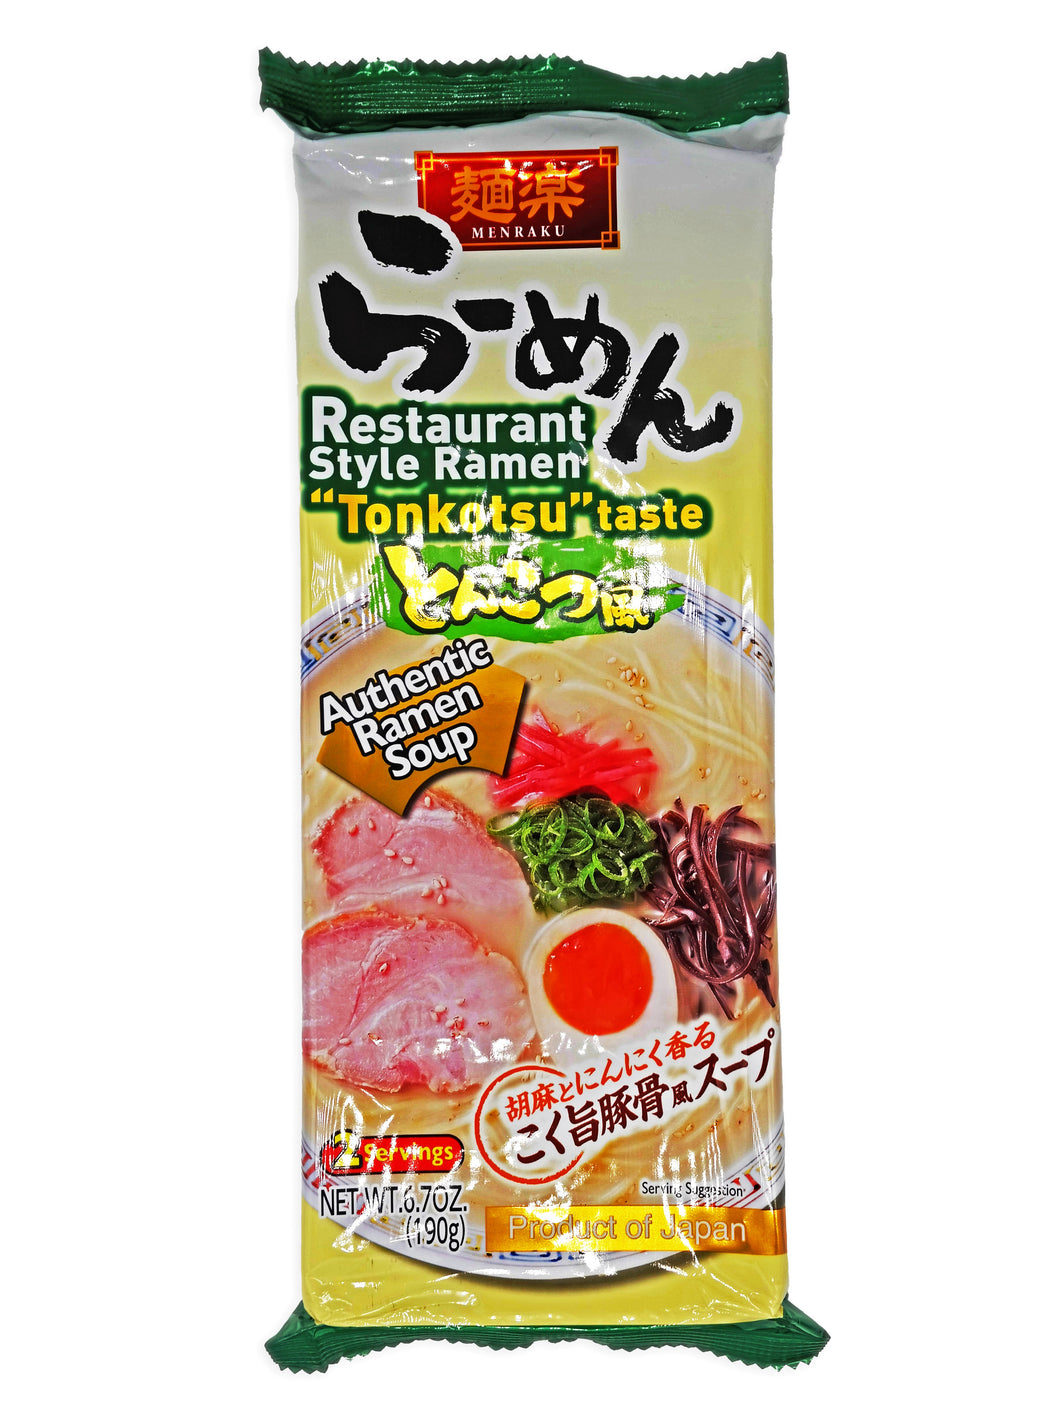 Menraku Restaurant Style Ramen - Tonkotsu Taste